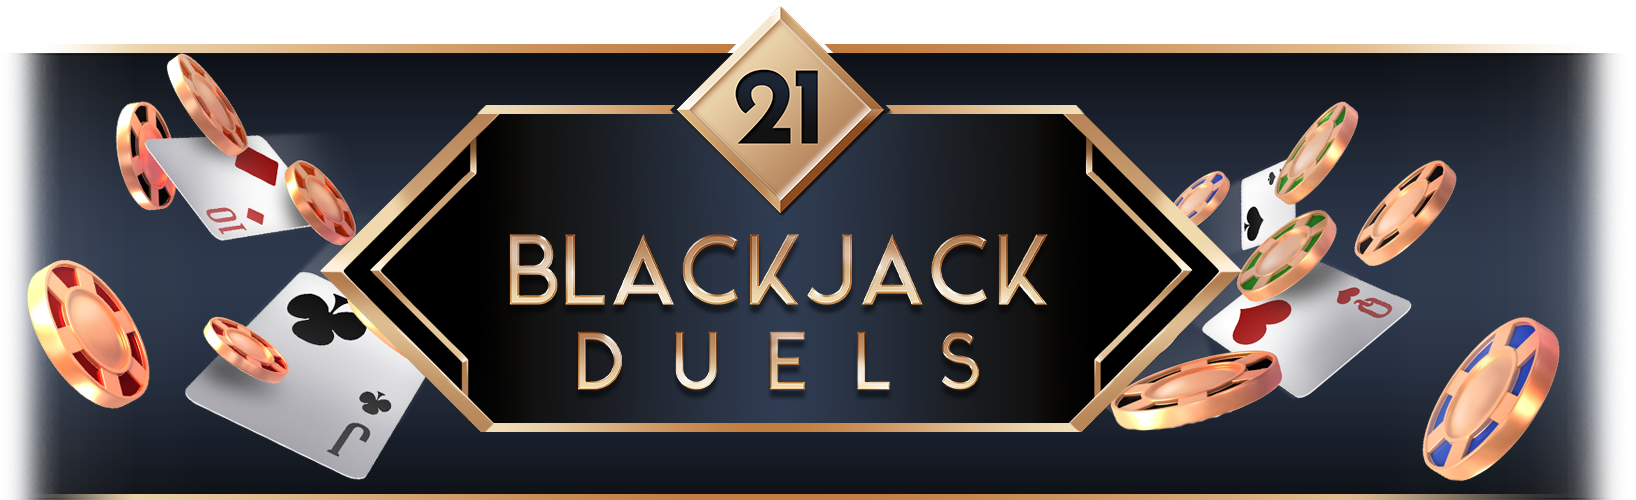 blackjack-duels_21_App_binteraktive